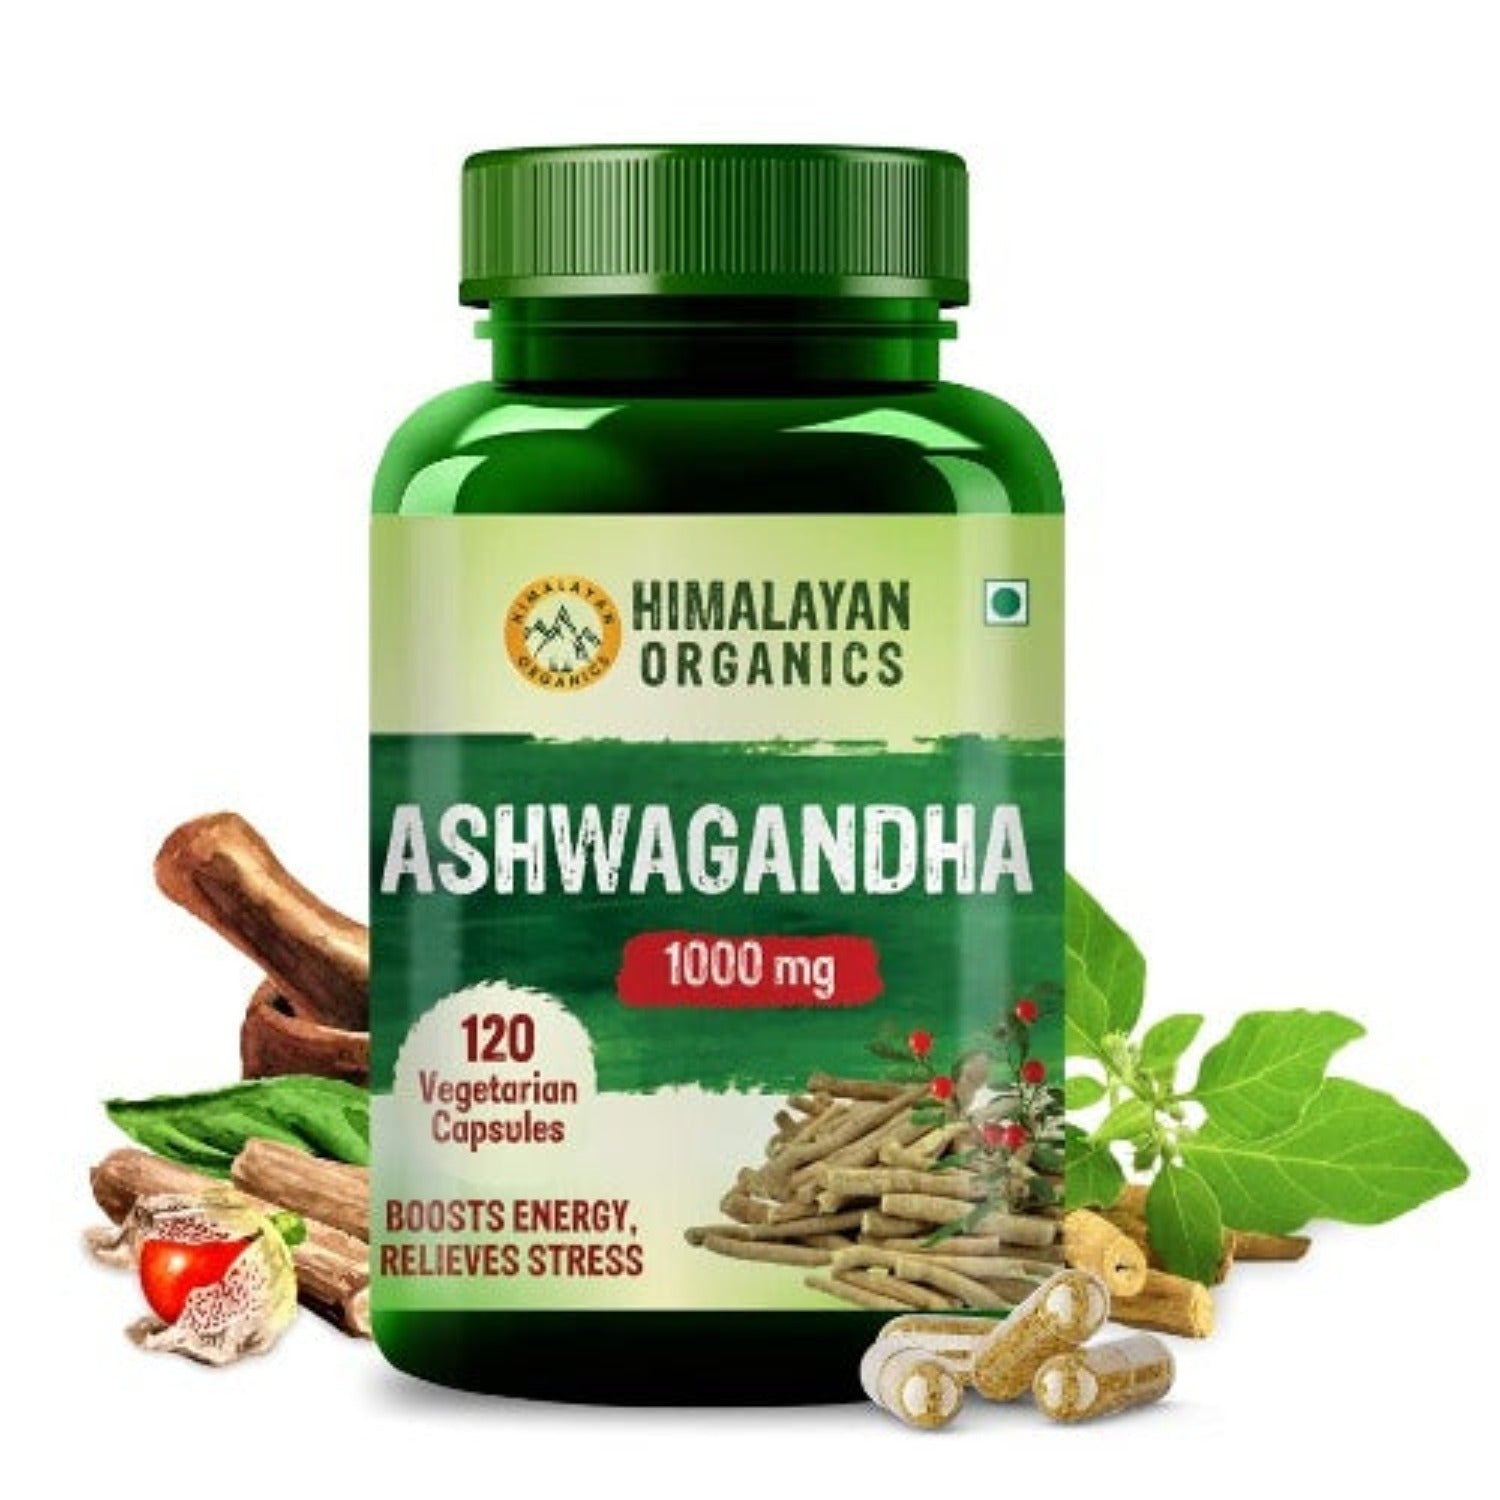 Himalayan Organics Ashwagandha 1000mg/Serve for Anxiety Stress Relief & Endurance Vegetarian Capsules